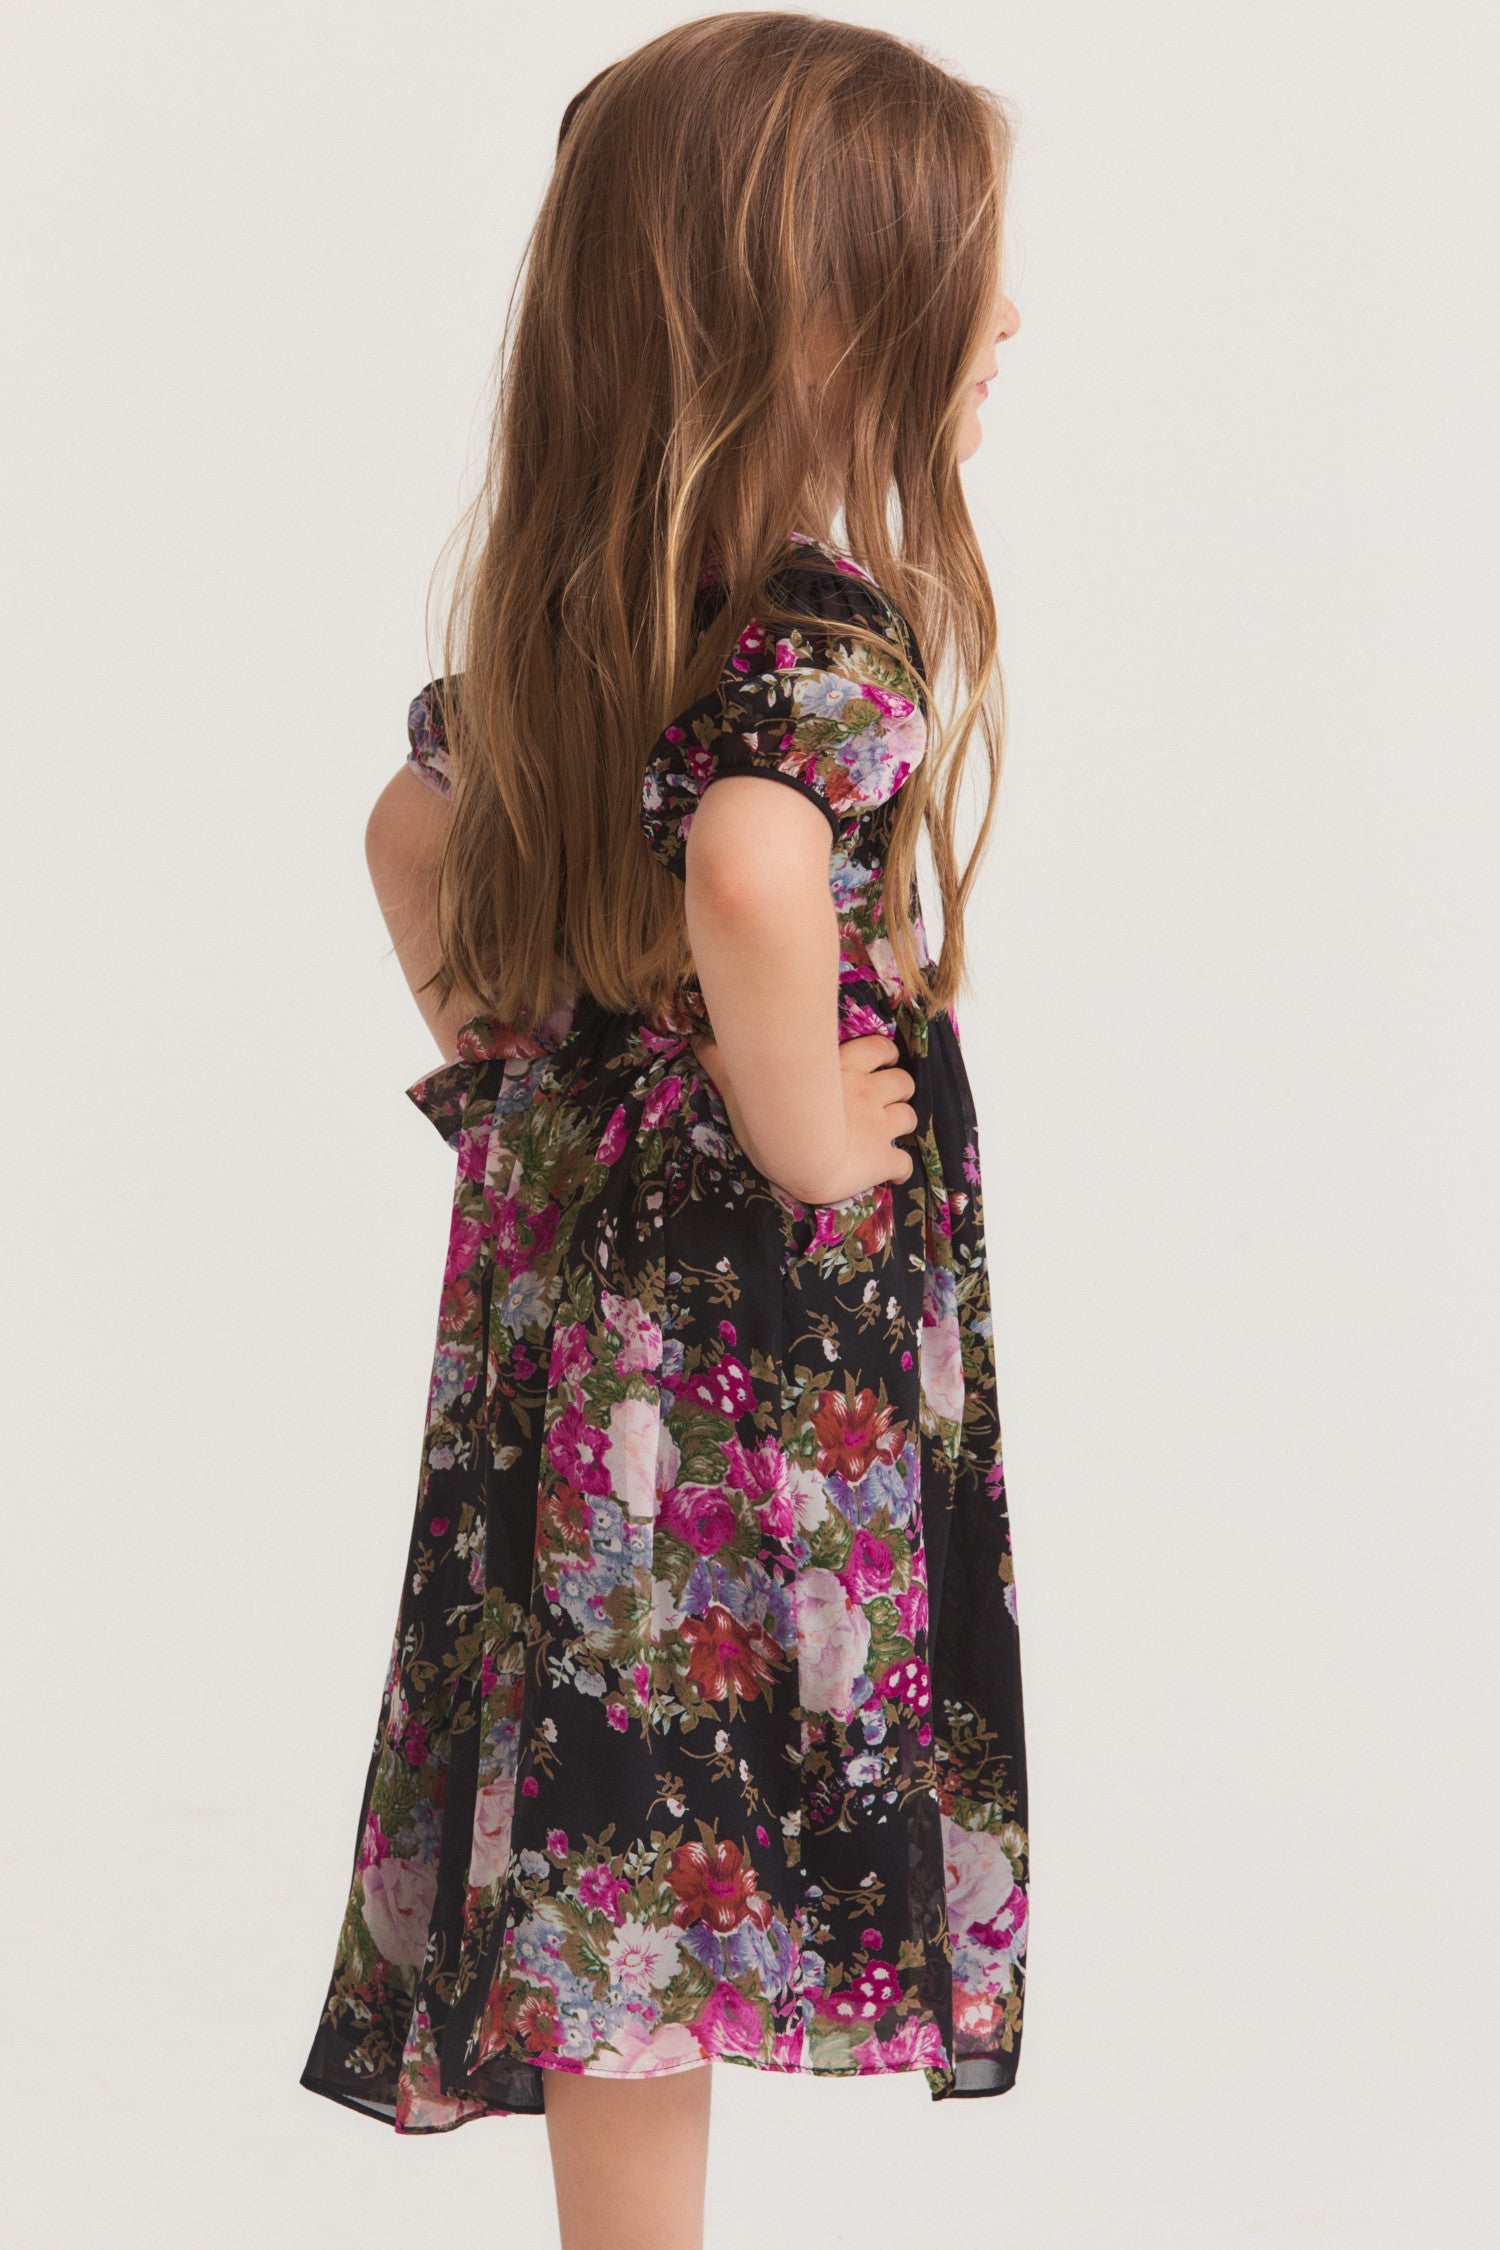 Little girl wearing short sleeved black dress with floral pink pattern